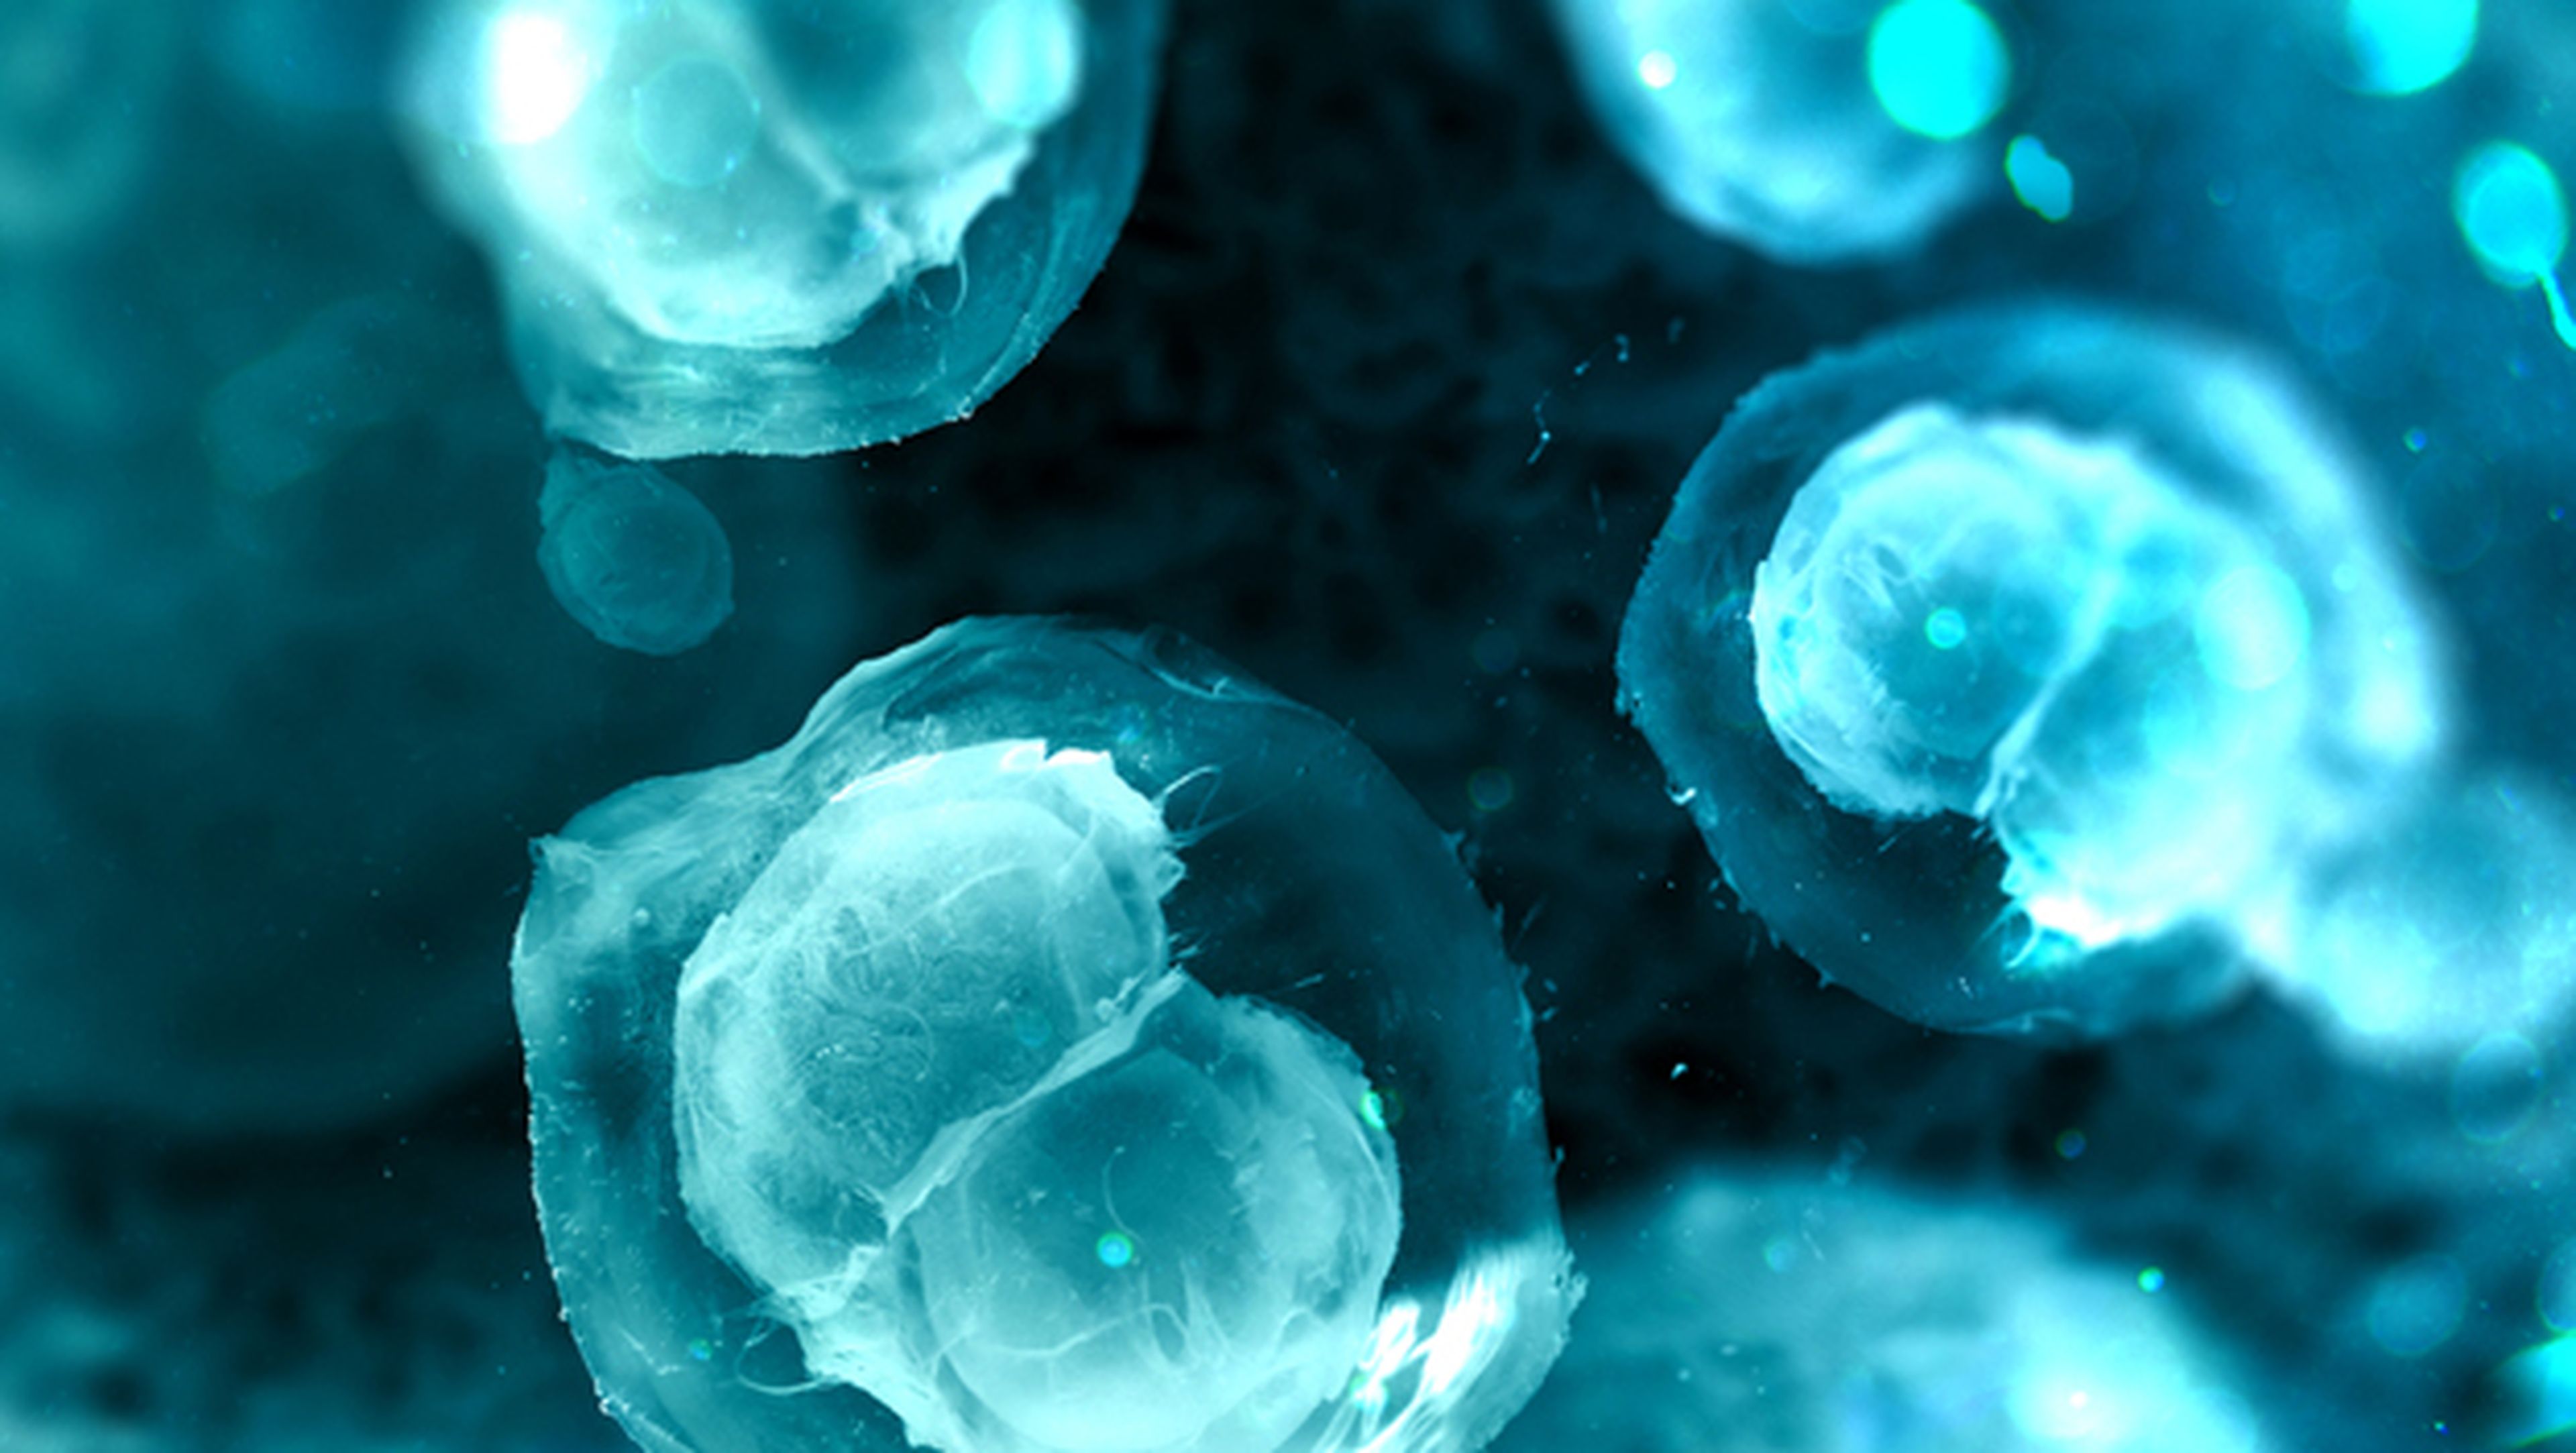 Nueva técnica reproductiva crea esperma con células madre